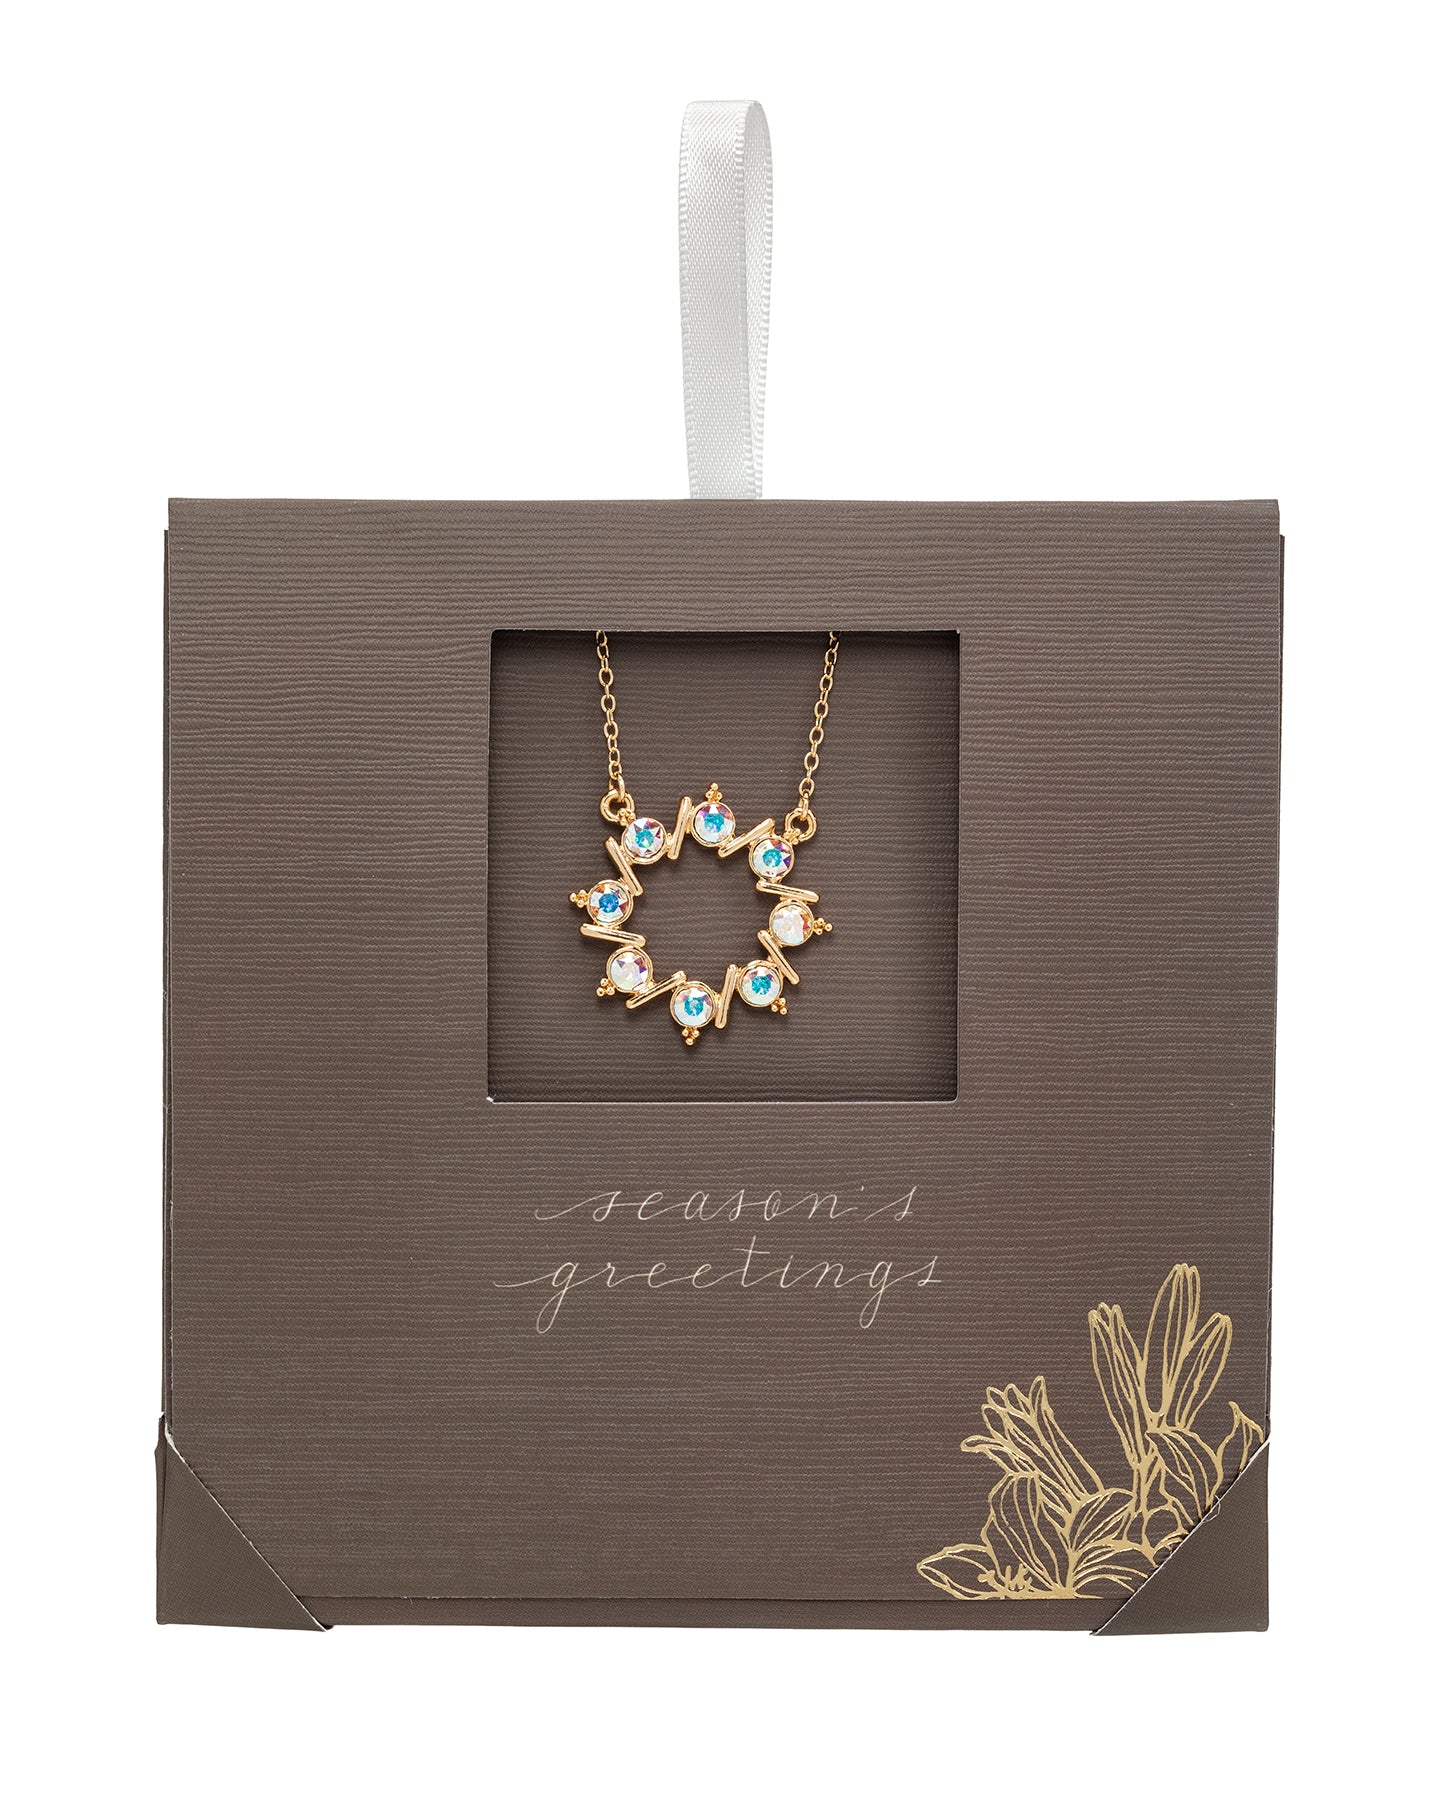 Goldtone Ab Swarovski Crystal Wreath Pendant Necklace - On Holiday Card